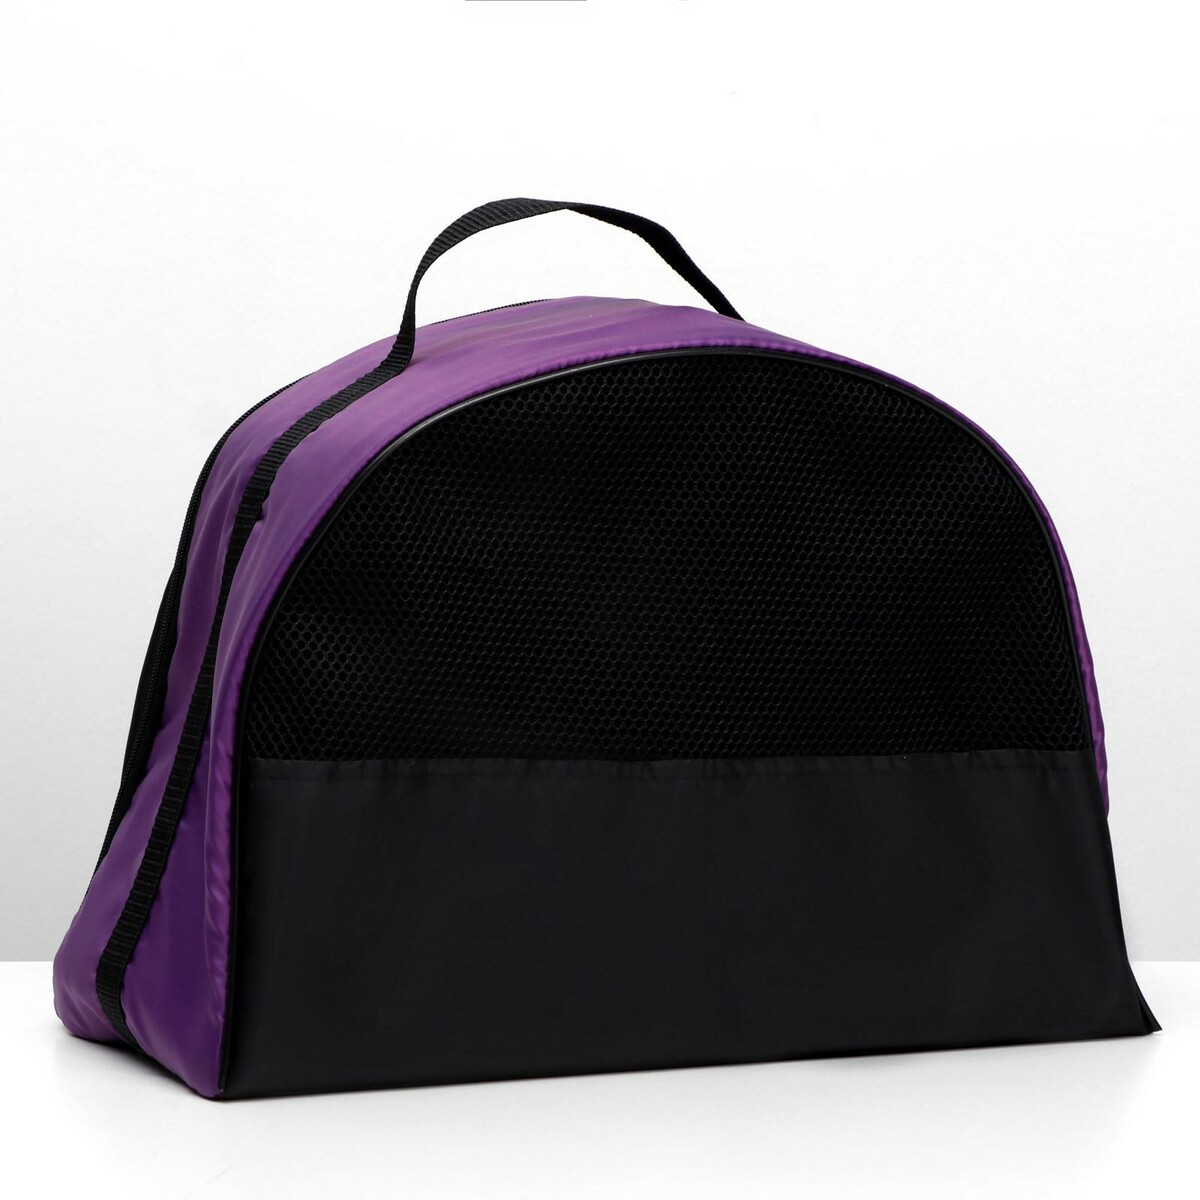 Сумка - переноска для животных, оксфорд, 42 х 22 х 29 см, фиолетовая сумка переноска для животных оксфорд 39 х 19 х 27 см фиолетовая